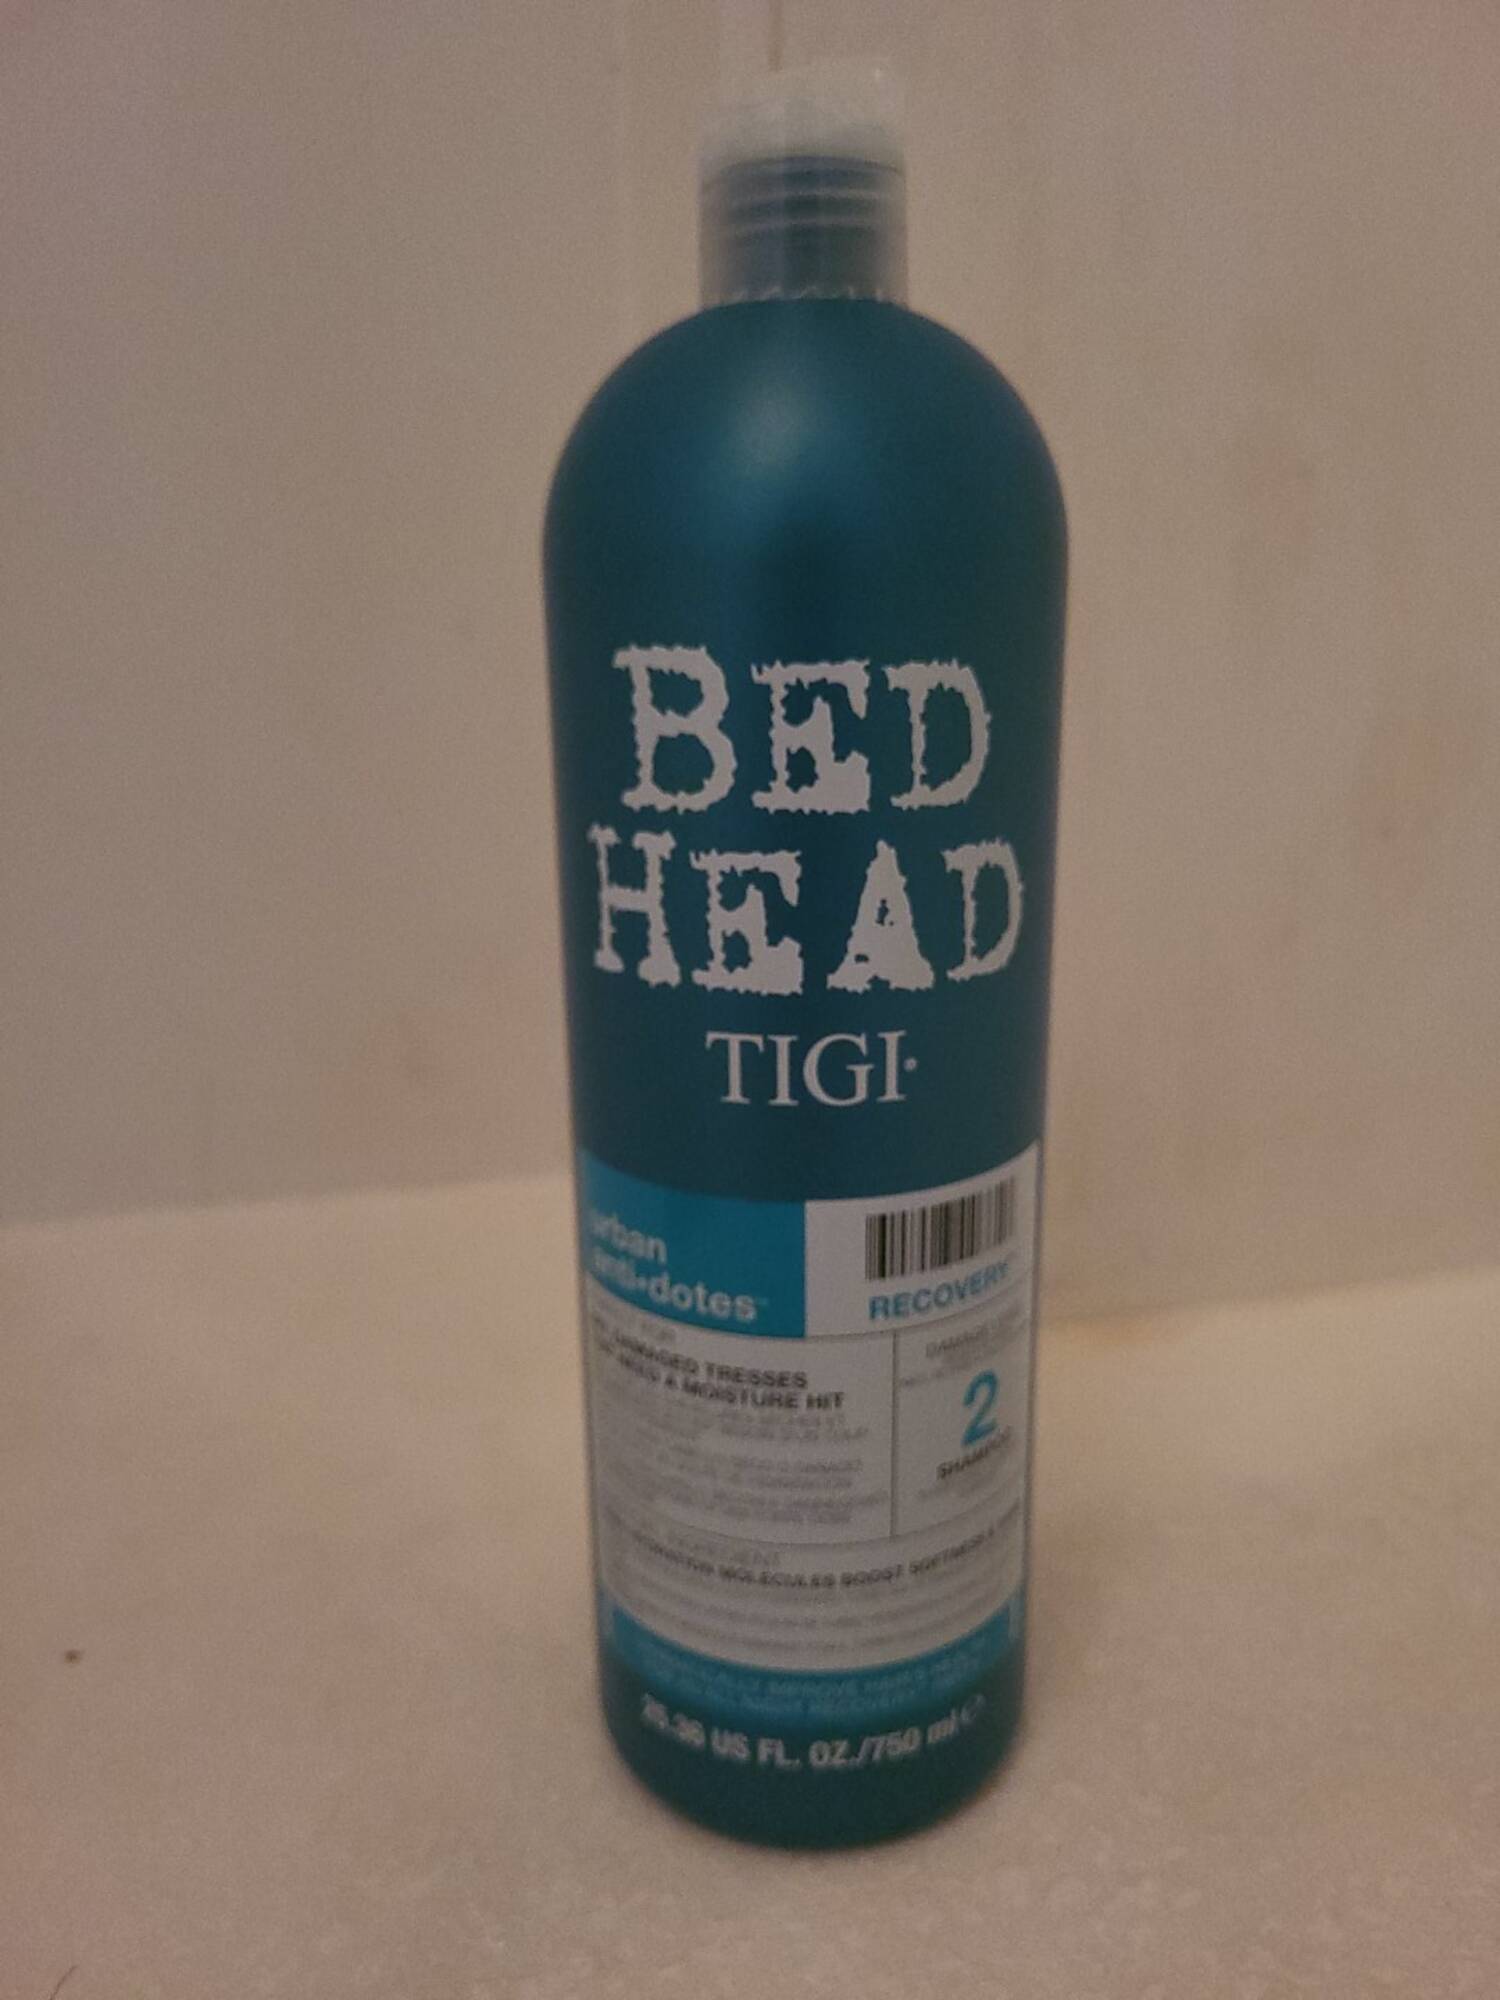 TIGI - Bed head - Urban anti+dotes 2 shampoo